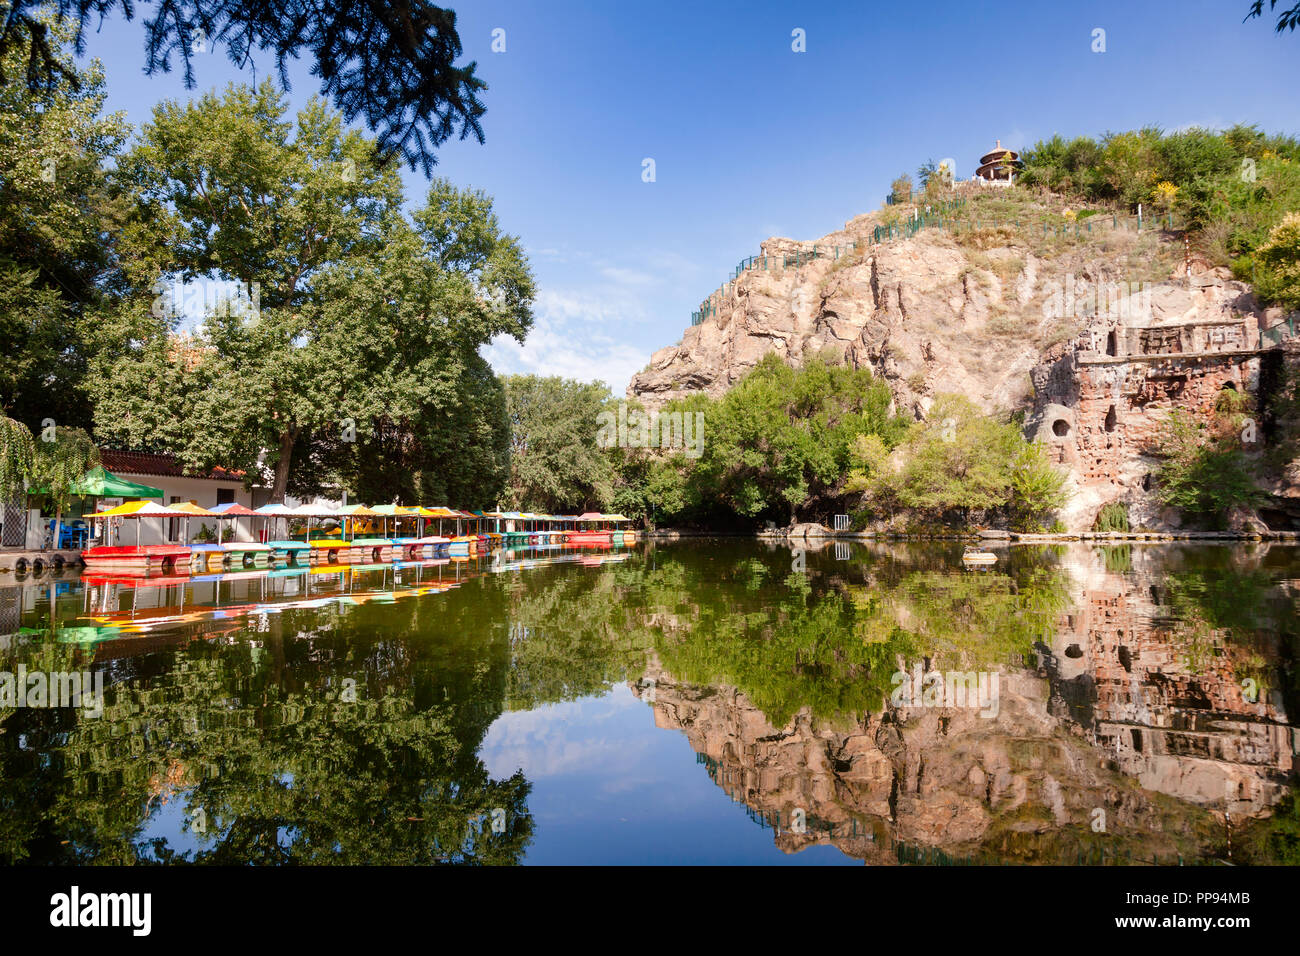 Wasser Boote auf dem Teich in Hong Shan (Roter Berg) Hongshan oder Park in Urumqi, Xinjiang, China Stockfoto